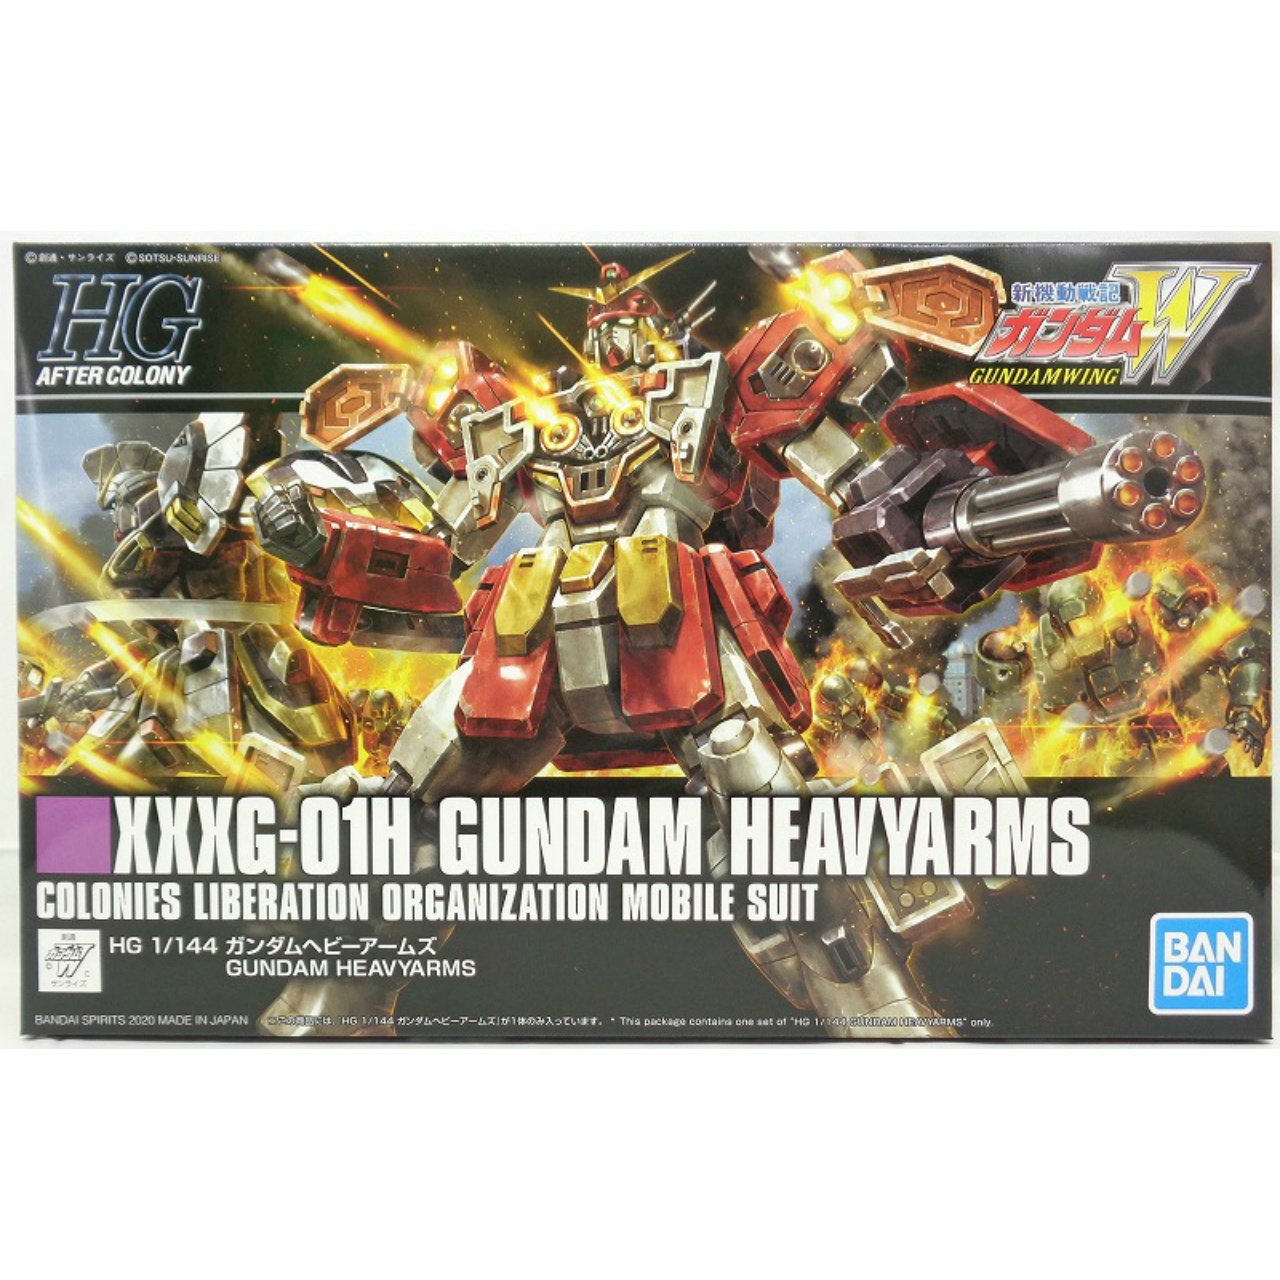 HGAC 236 1/144 XXXG-01H Gundam HEAVYARMS (Bandai Spirits Ver.)